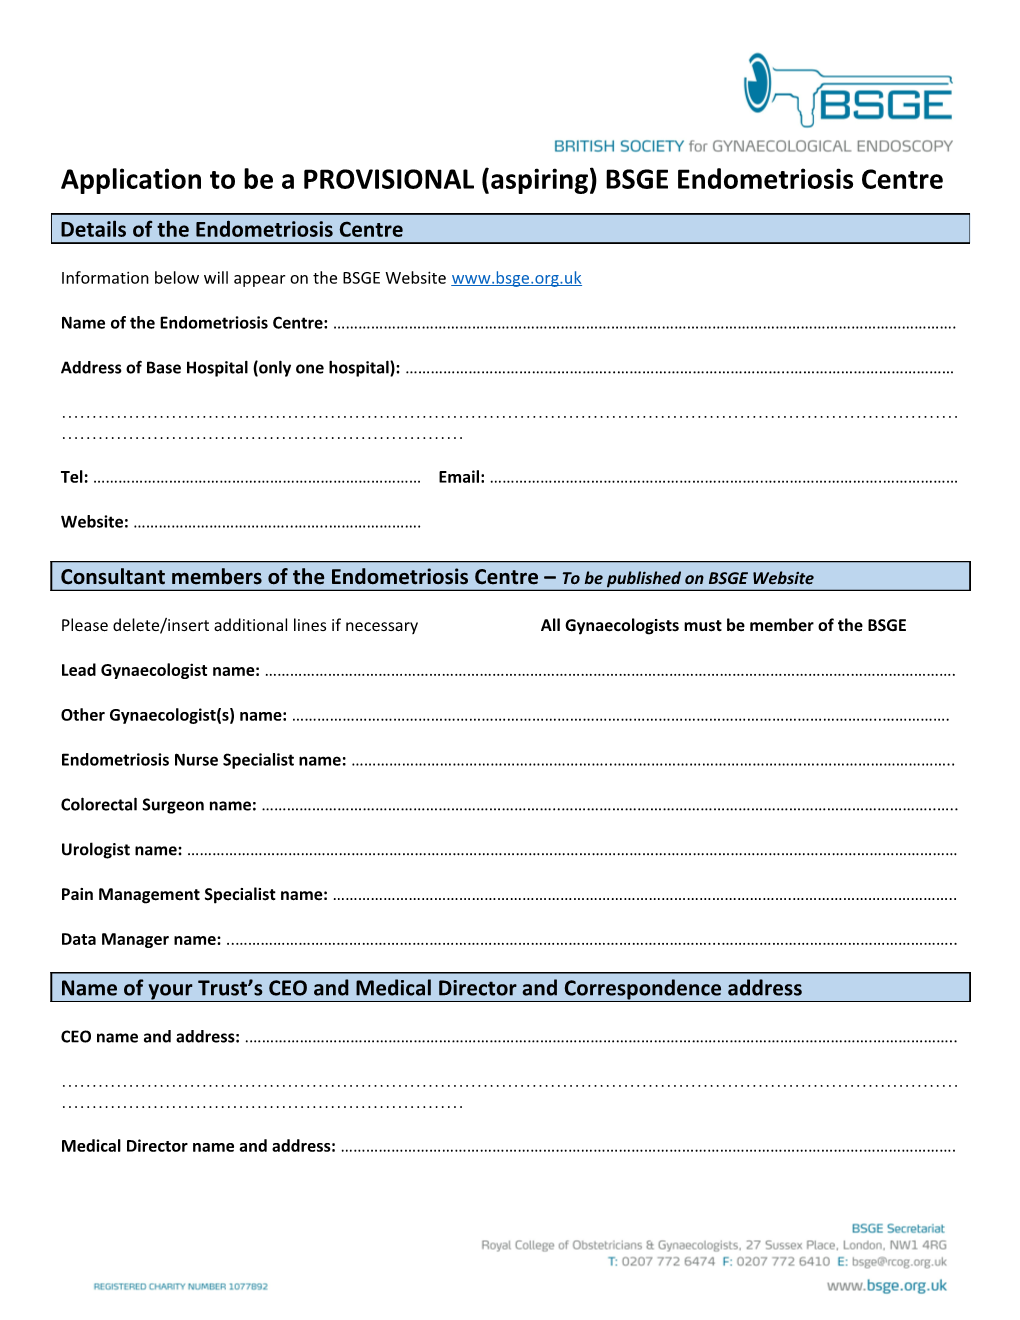 Application to Be a PROVISIONAL (Aspiring) BSGE Endometriosis Centre